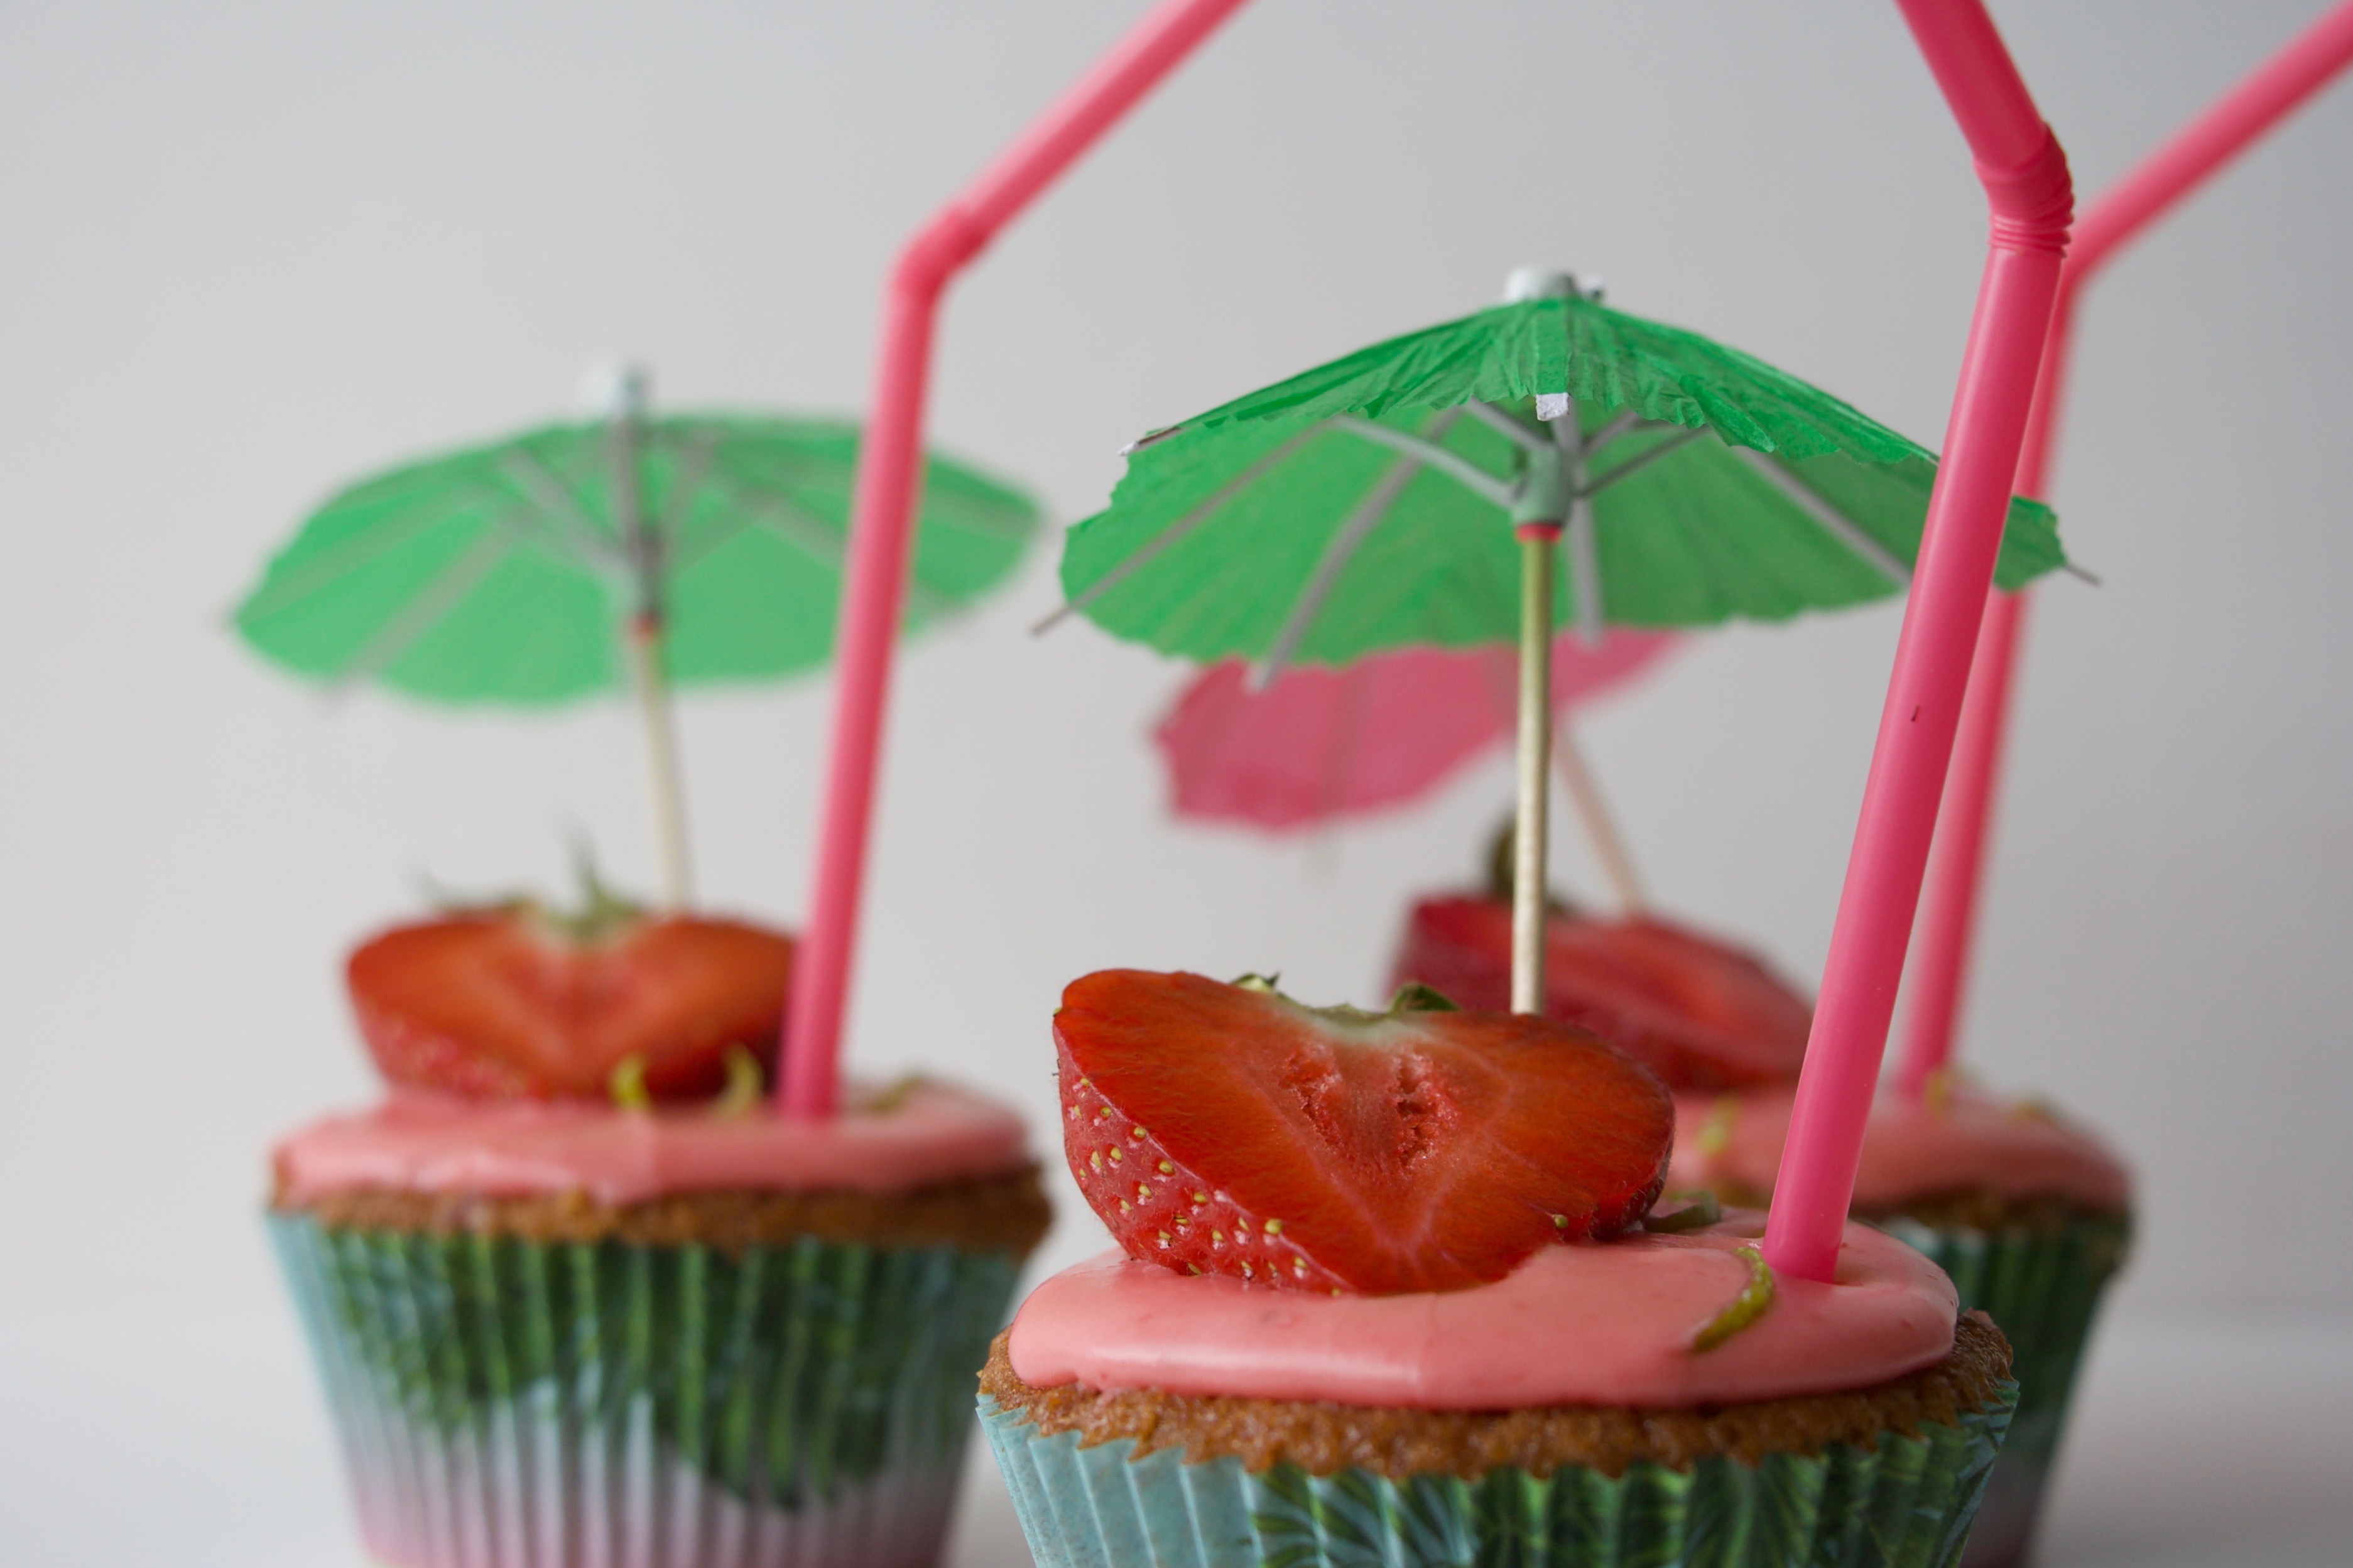 Stawberry daiquiri cupcakes